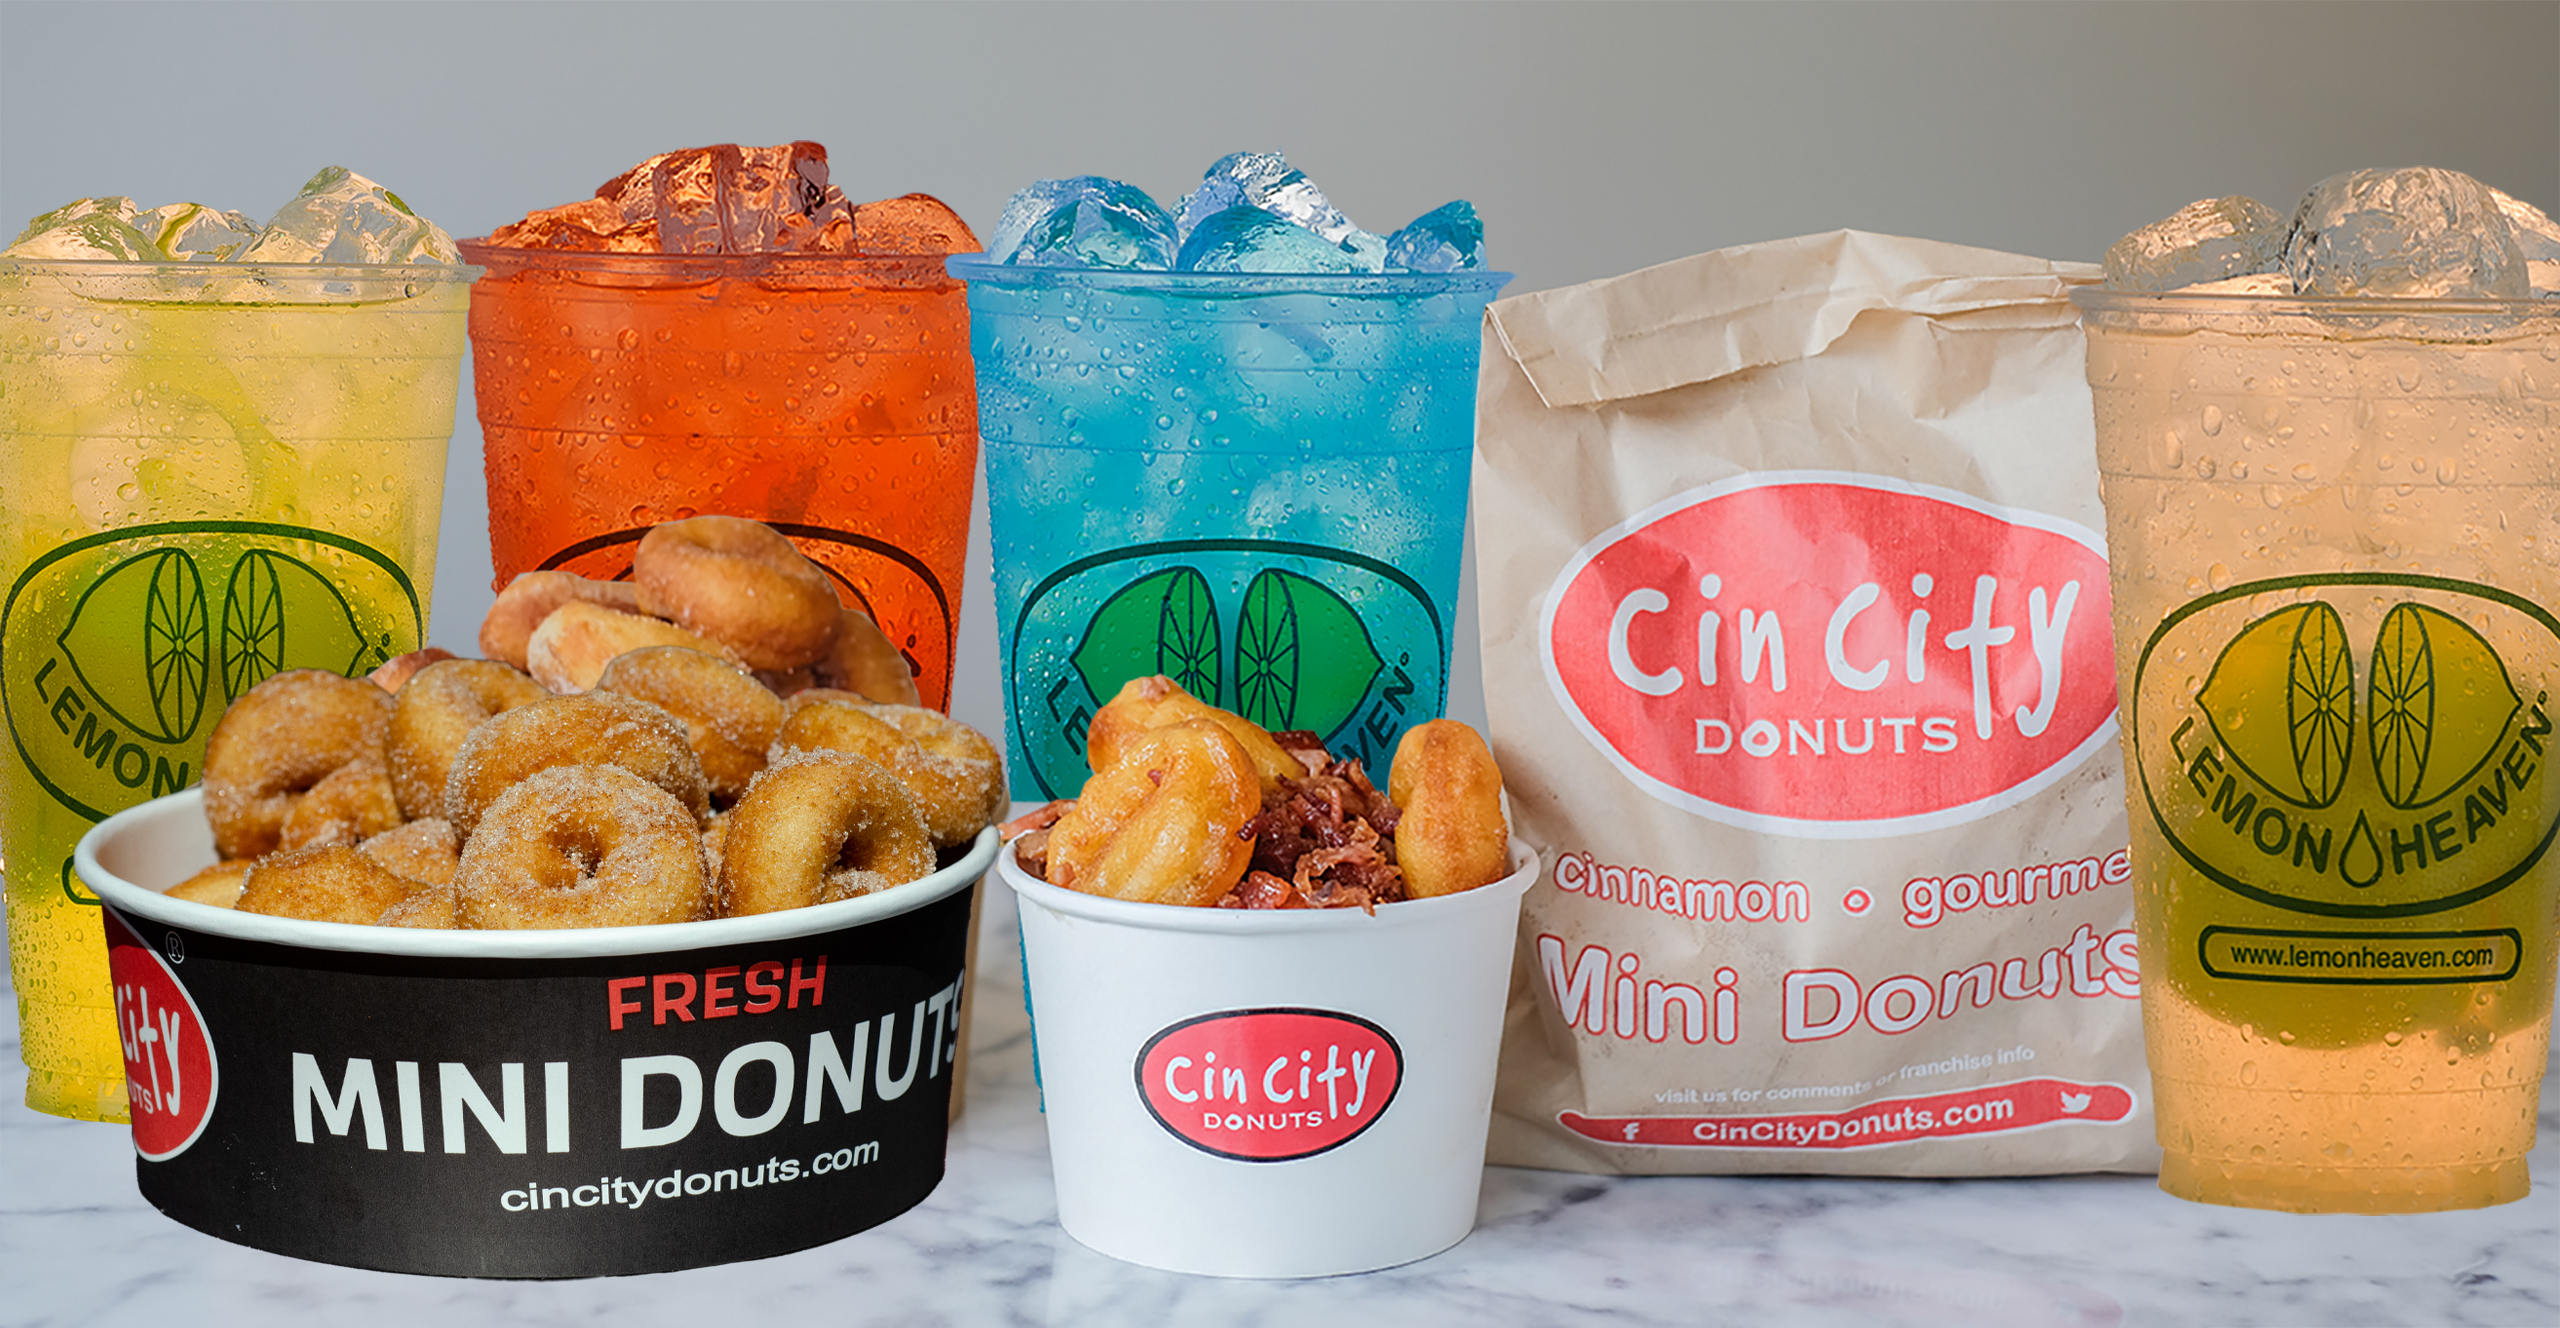 Lemon Heaven and Cin City Donuts